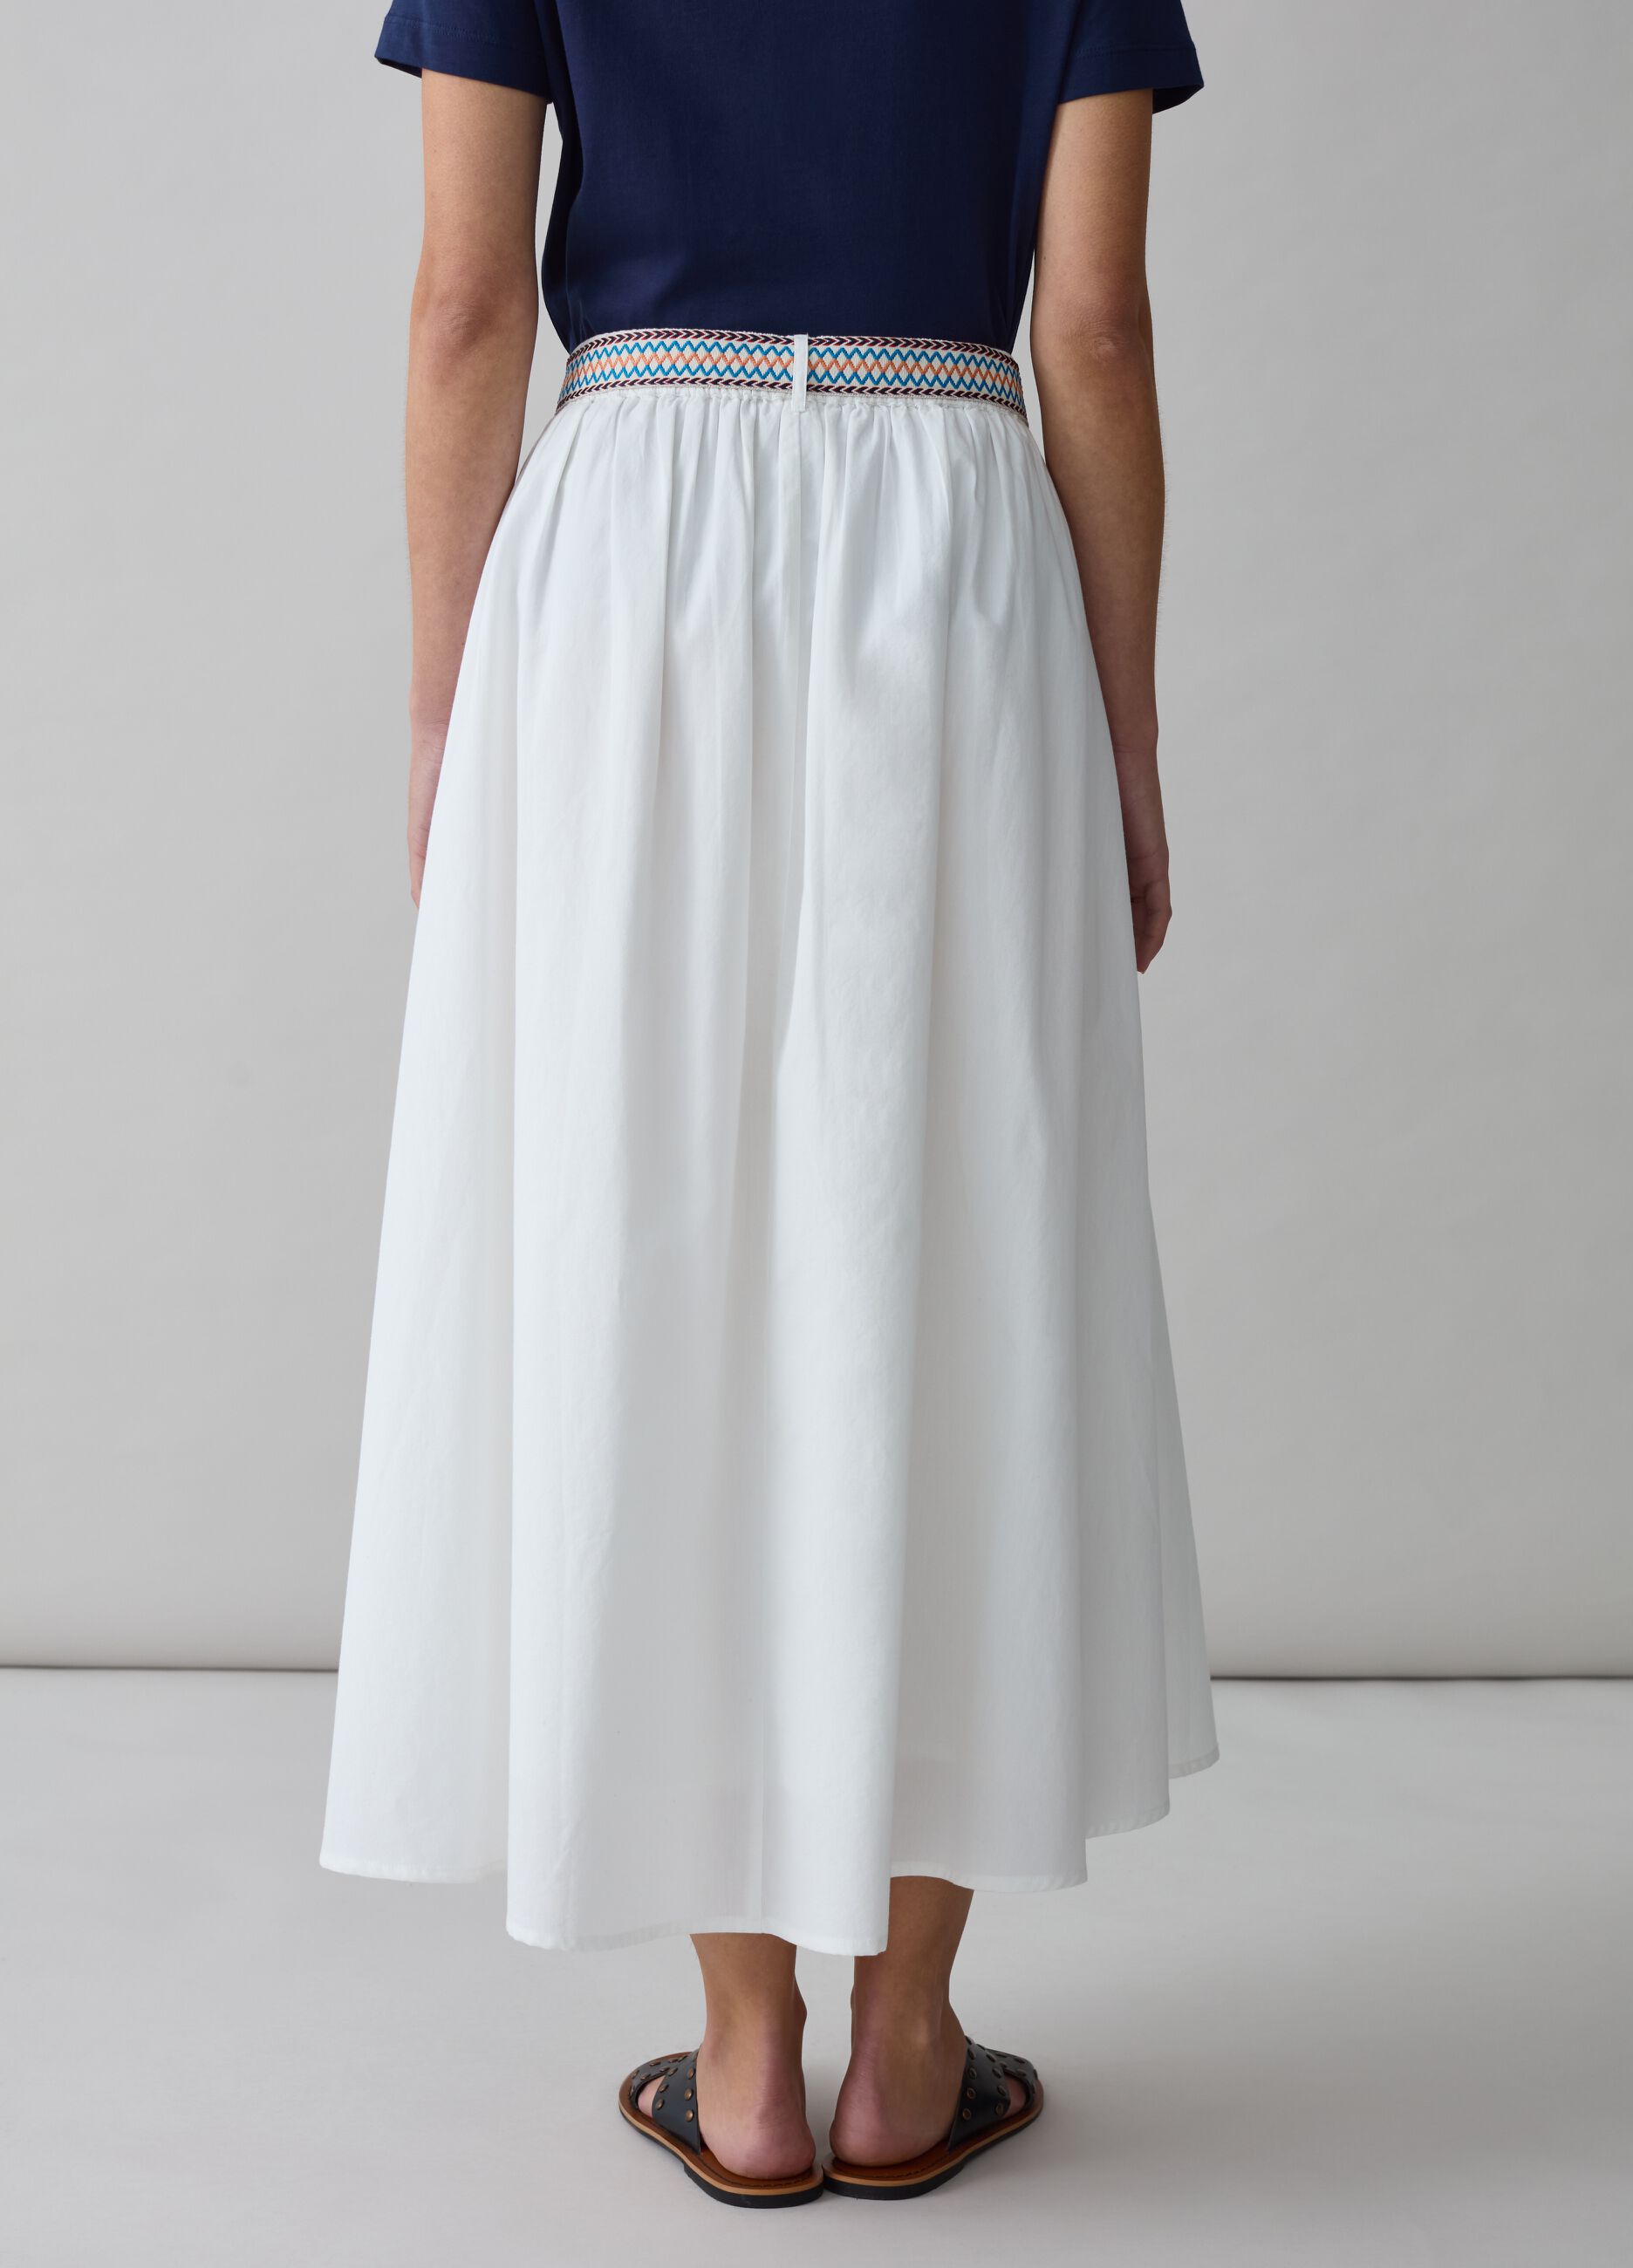 Long skirt with ethnic belt